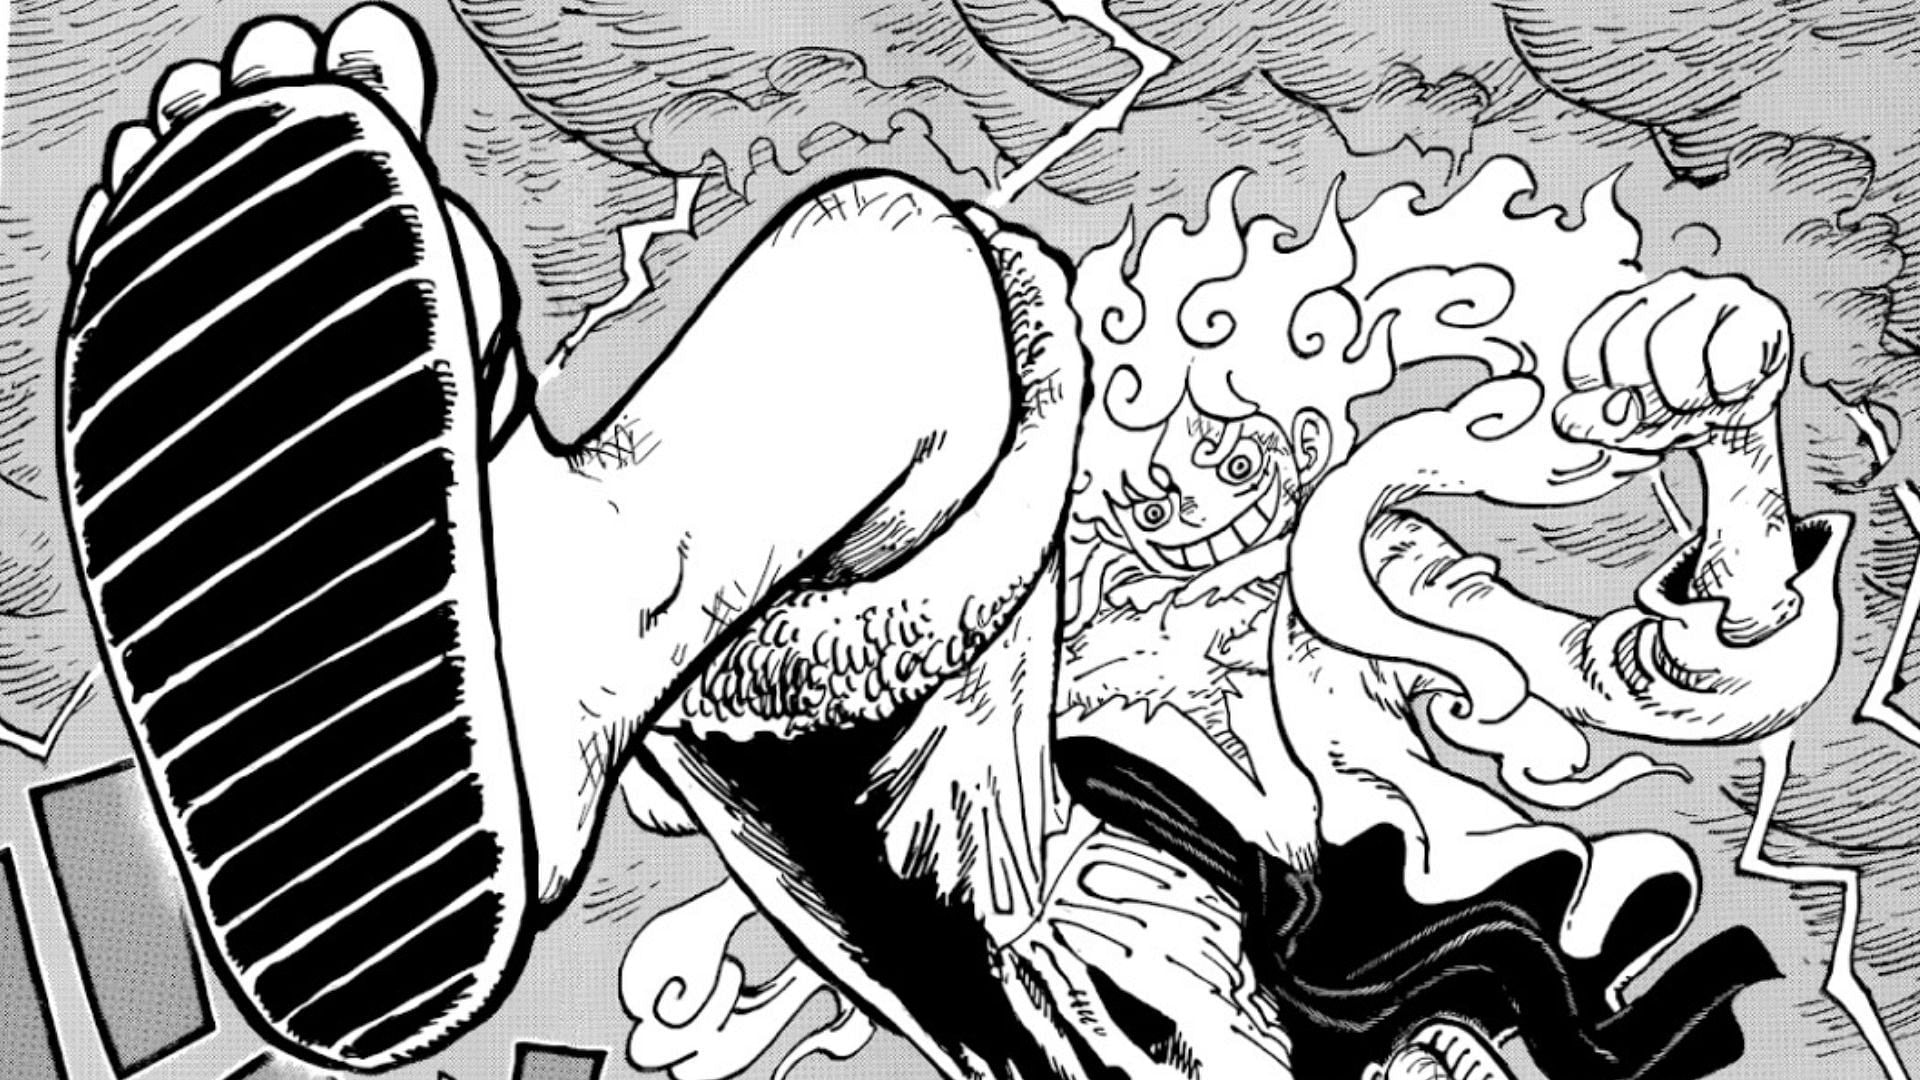 Luffy in Gear 5 in One Piece chapter 1070 (Image via Eiichiro Oda/Shueisha/Viz Media/One Piece)